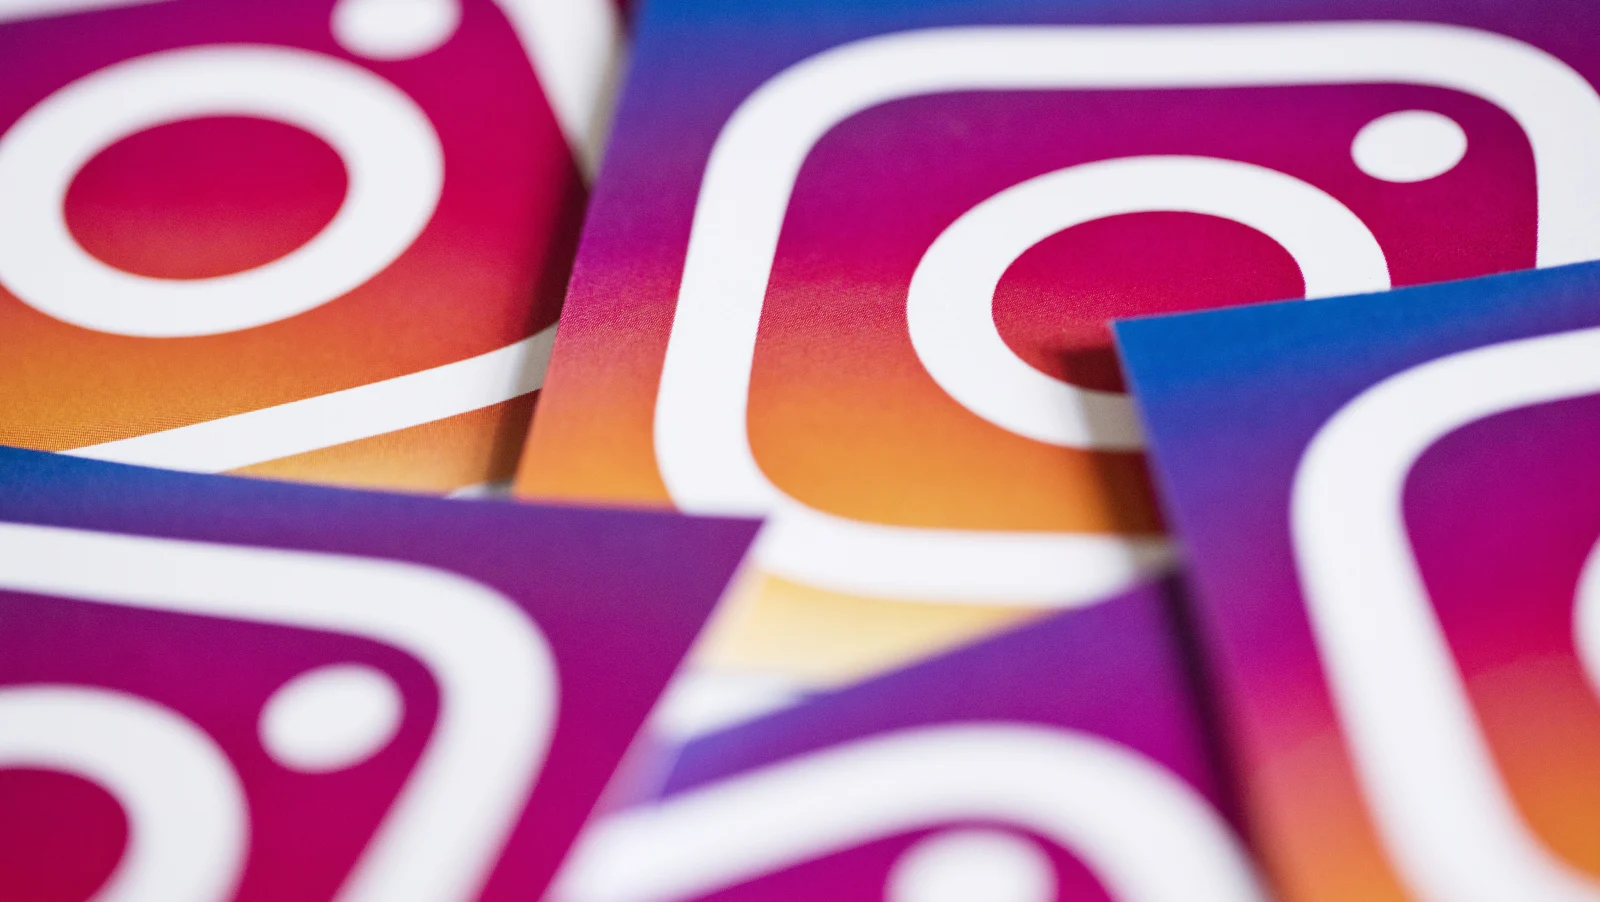 How the Instagram Algorithm Works in 2023 : Social Media Examiner